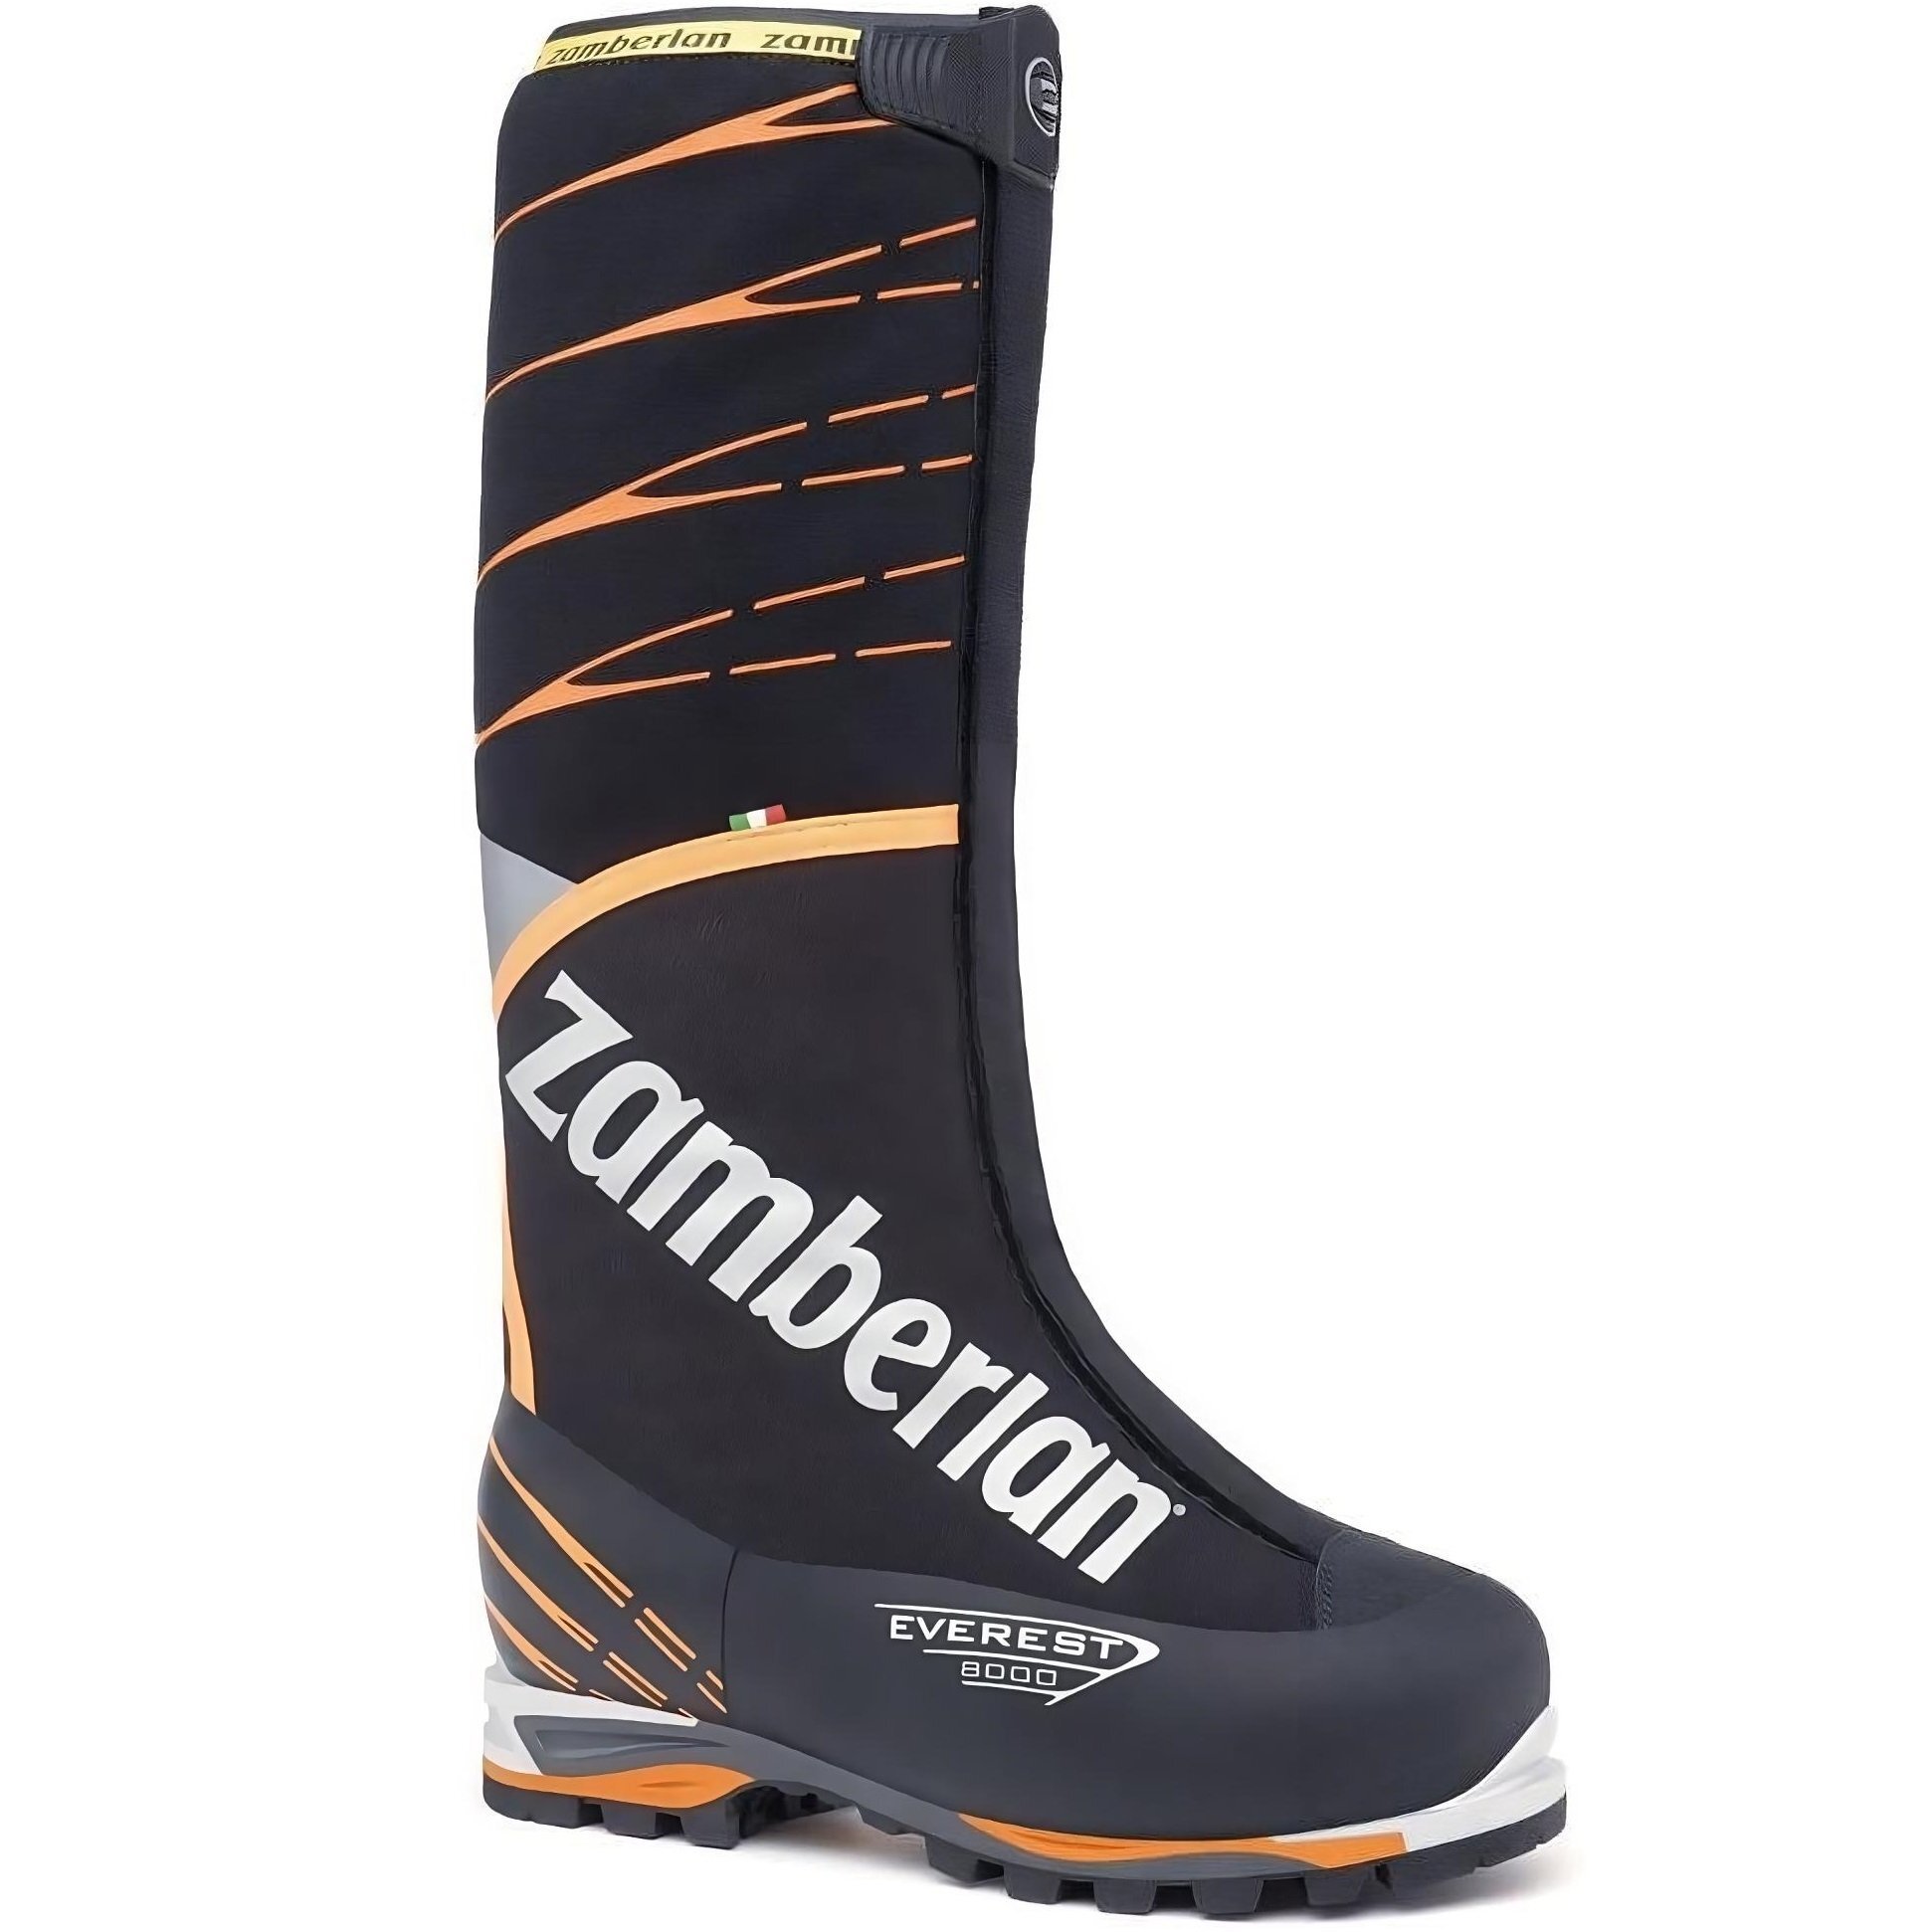 Ботинки Zamberlan 8000 Everest Evo RR black/orange 46 черный/оранжевый фото 1